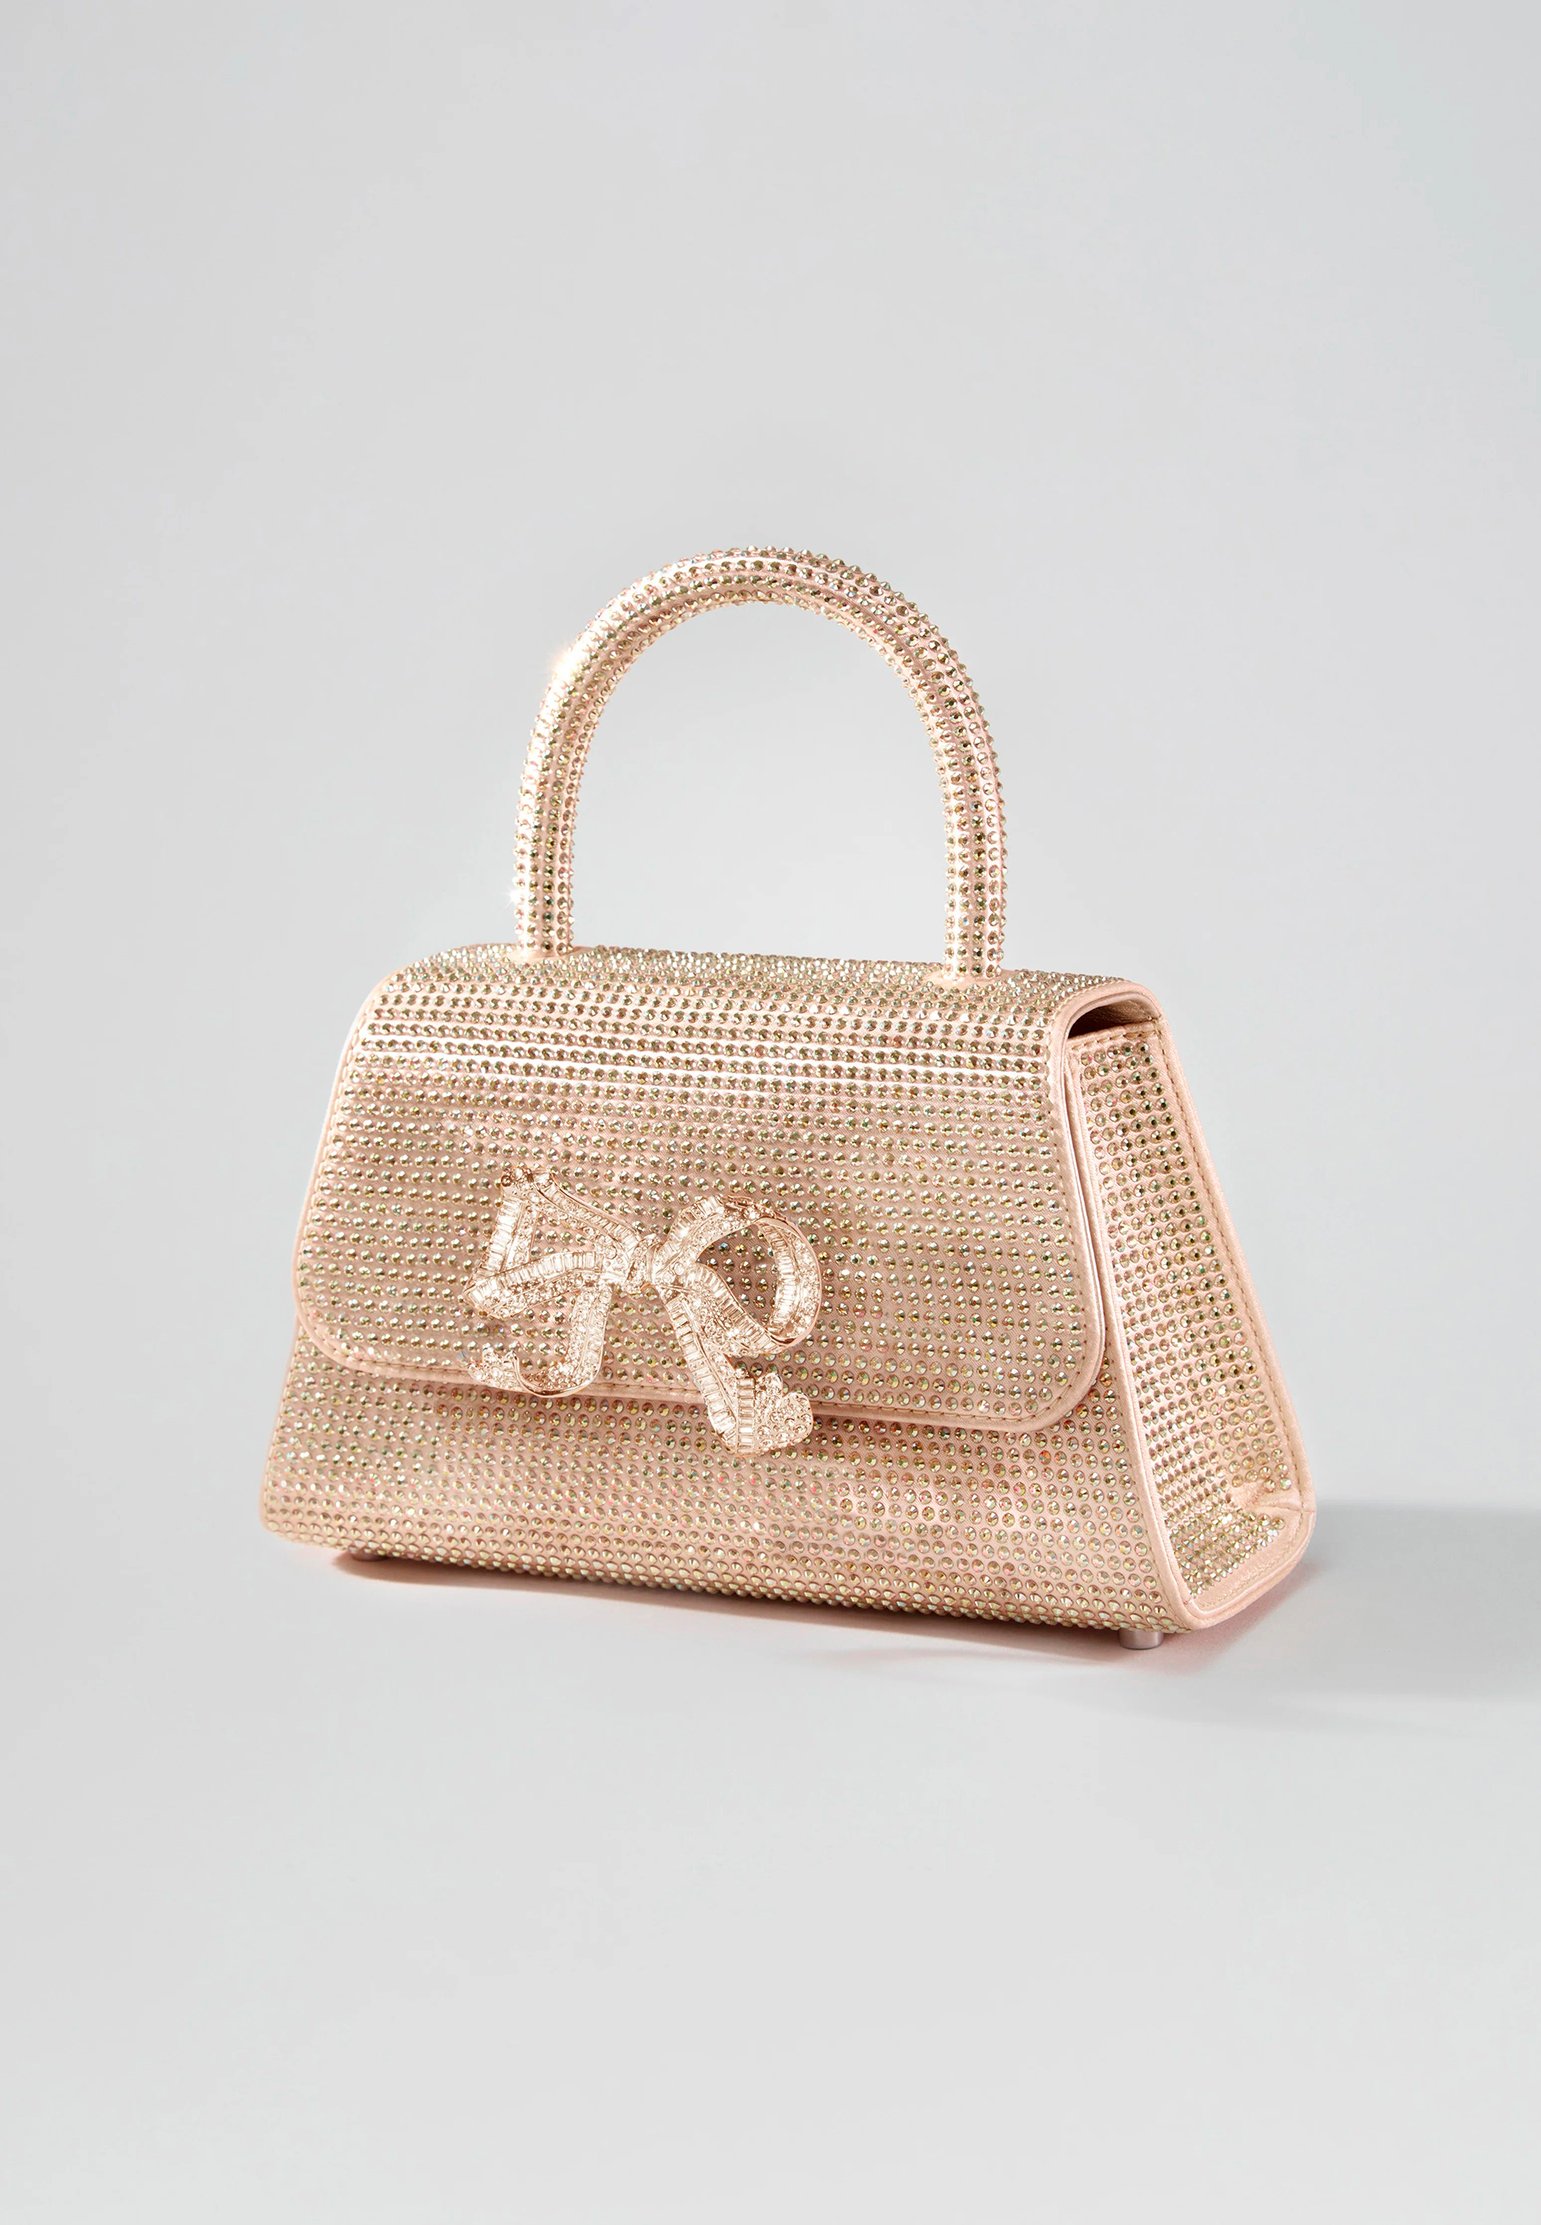 Bag SELF-PORTRAIT Color: cream (Code: 2768) in online store Allure